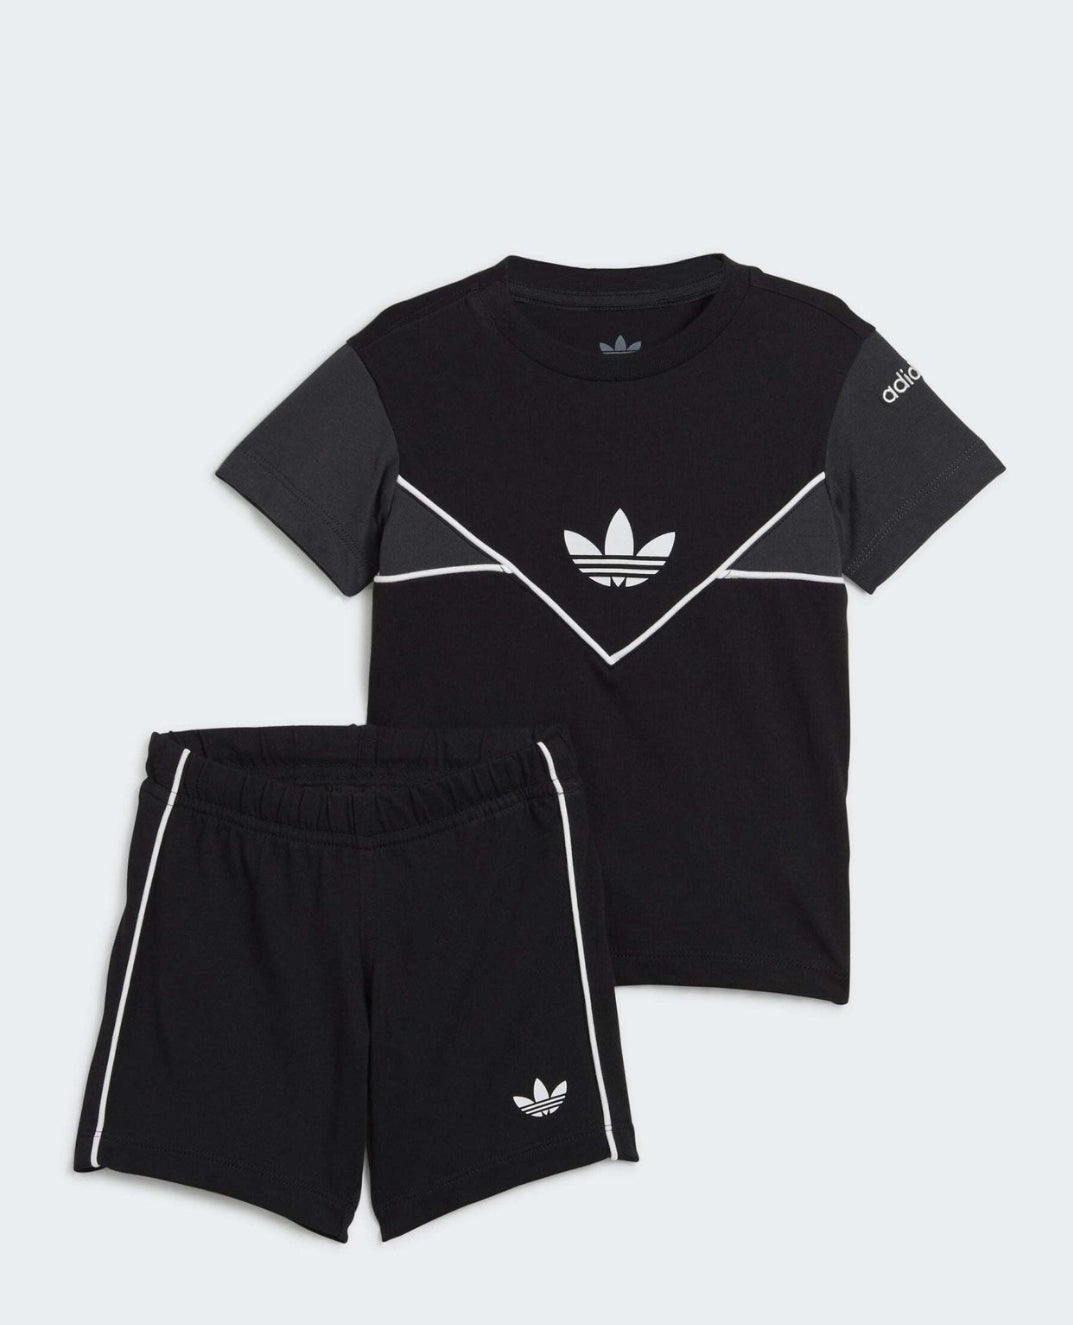 Adidas adicolor baby t-Shirt und kurze "Trefoil" schwarz/grau